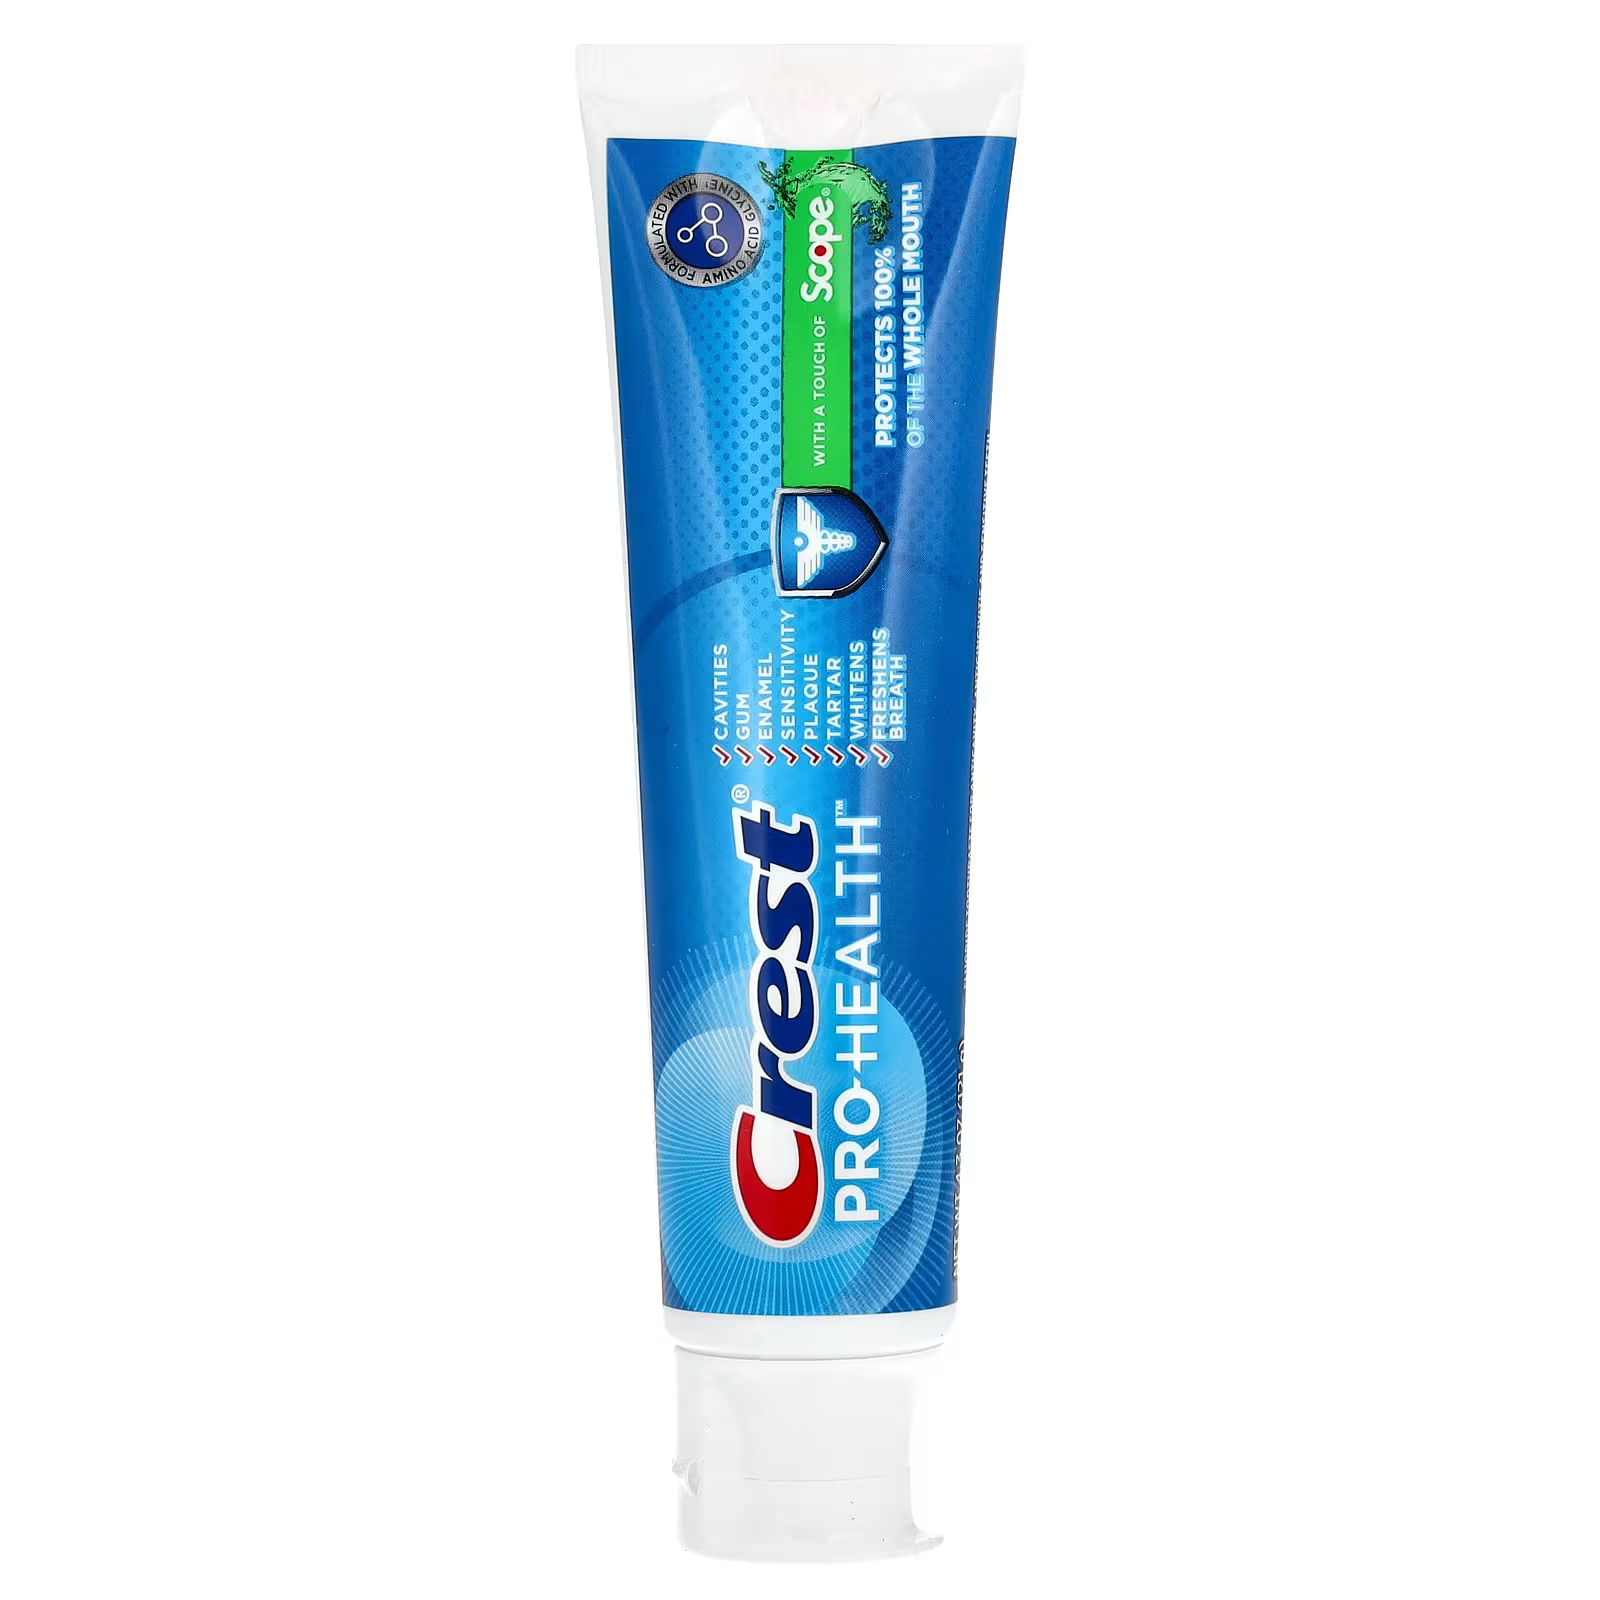 Зубная паста Crest Pro Health с фтором, 121 г цена и фото